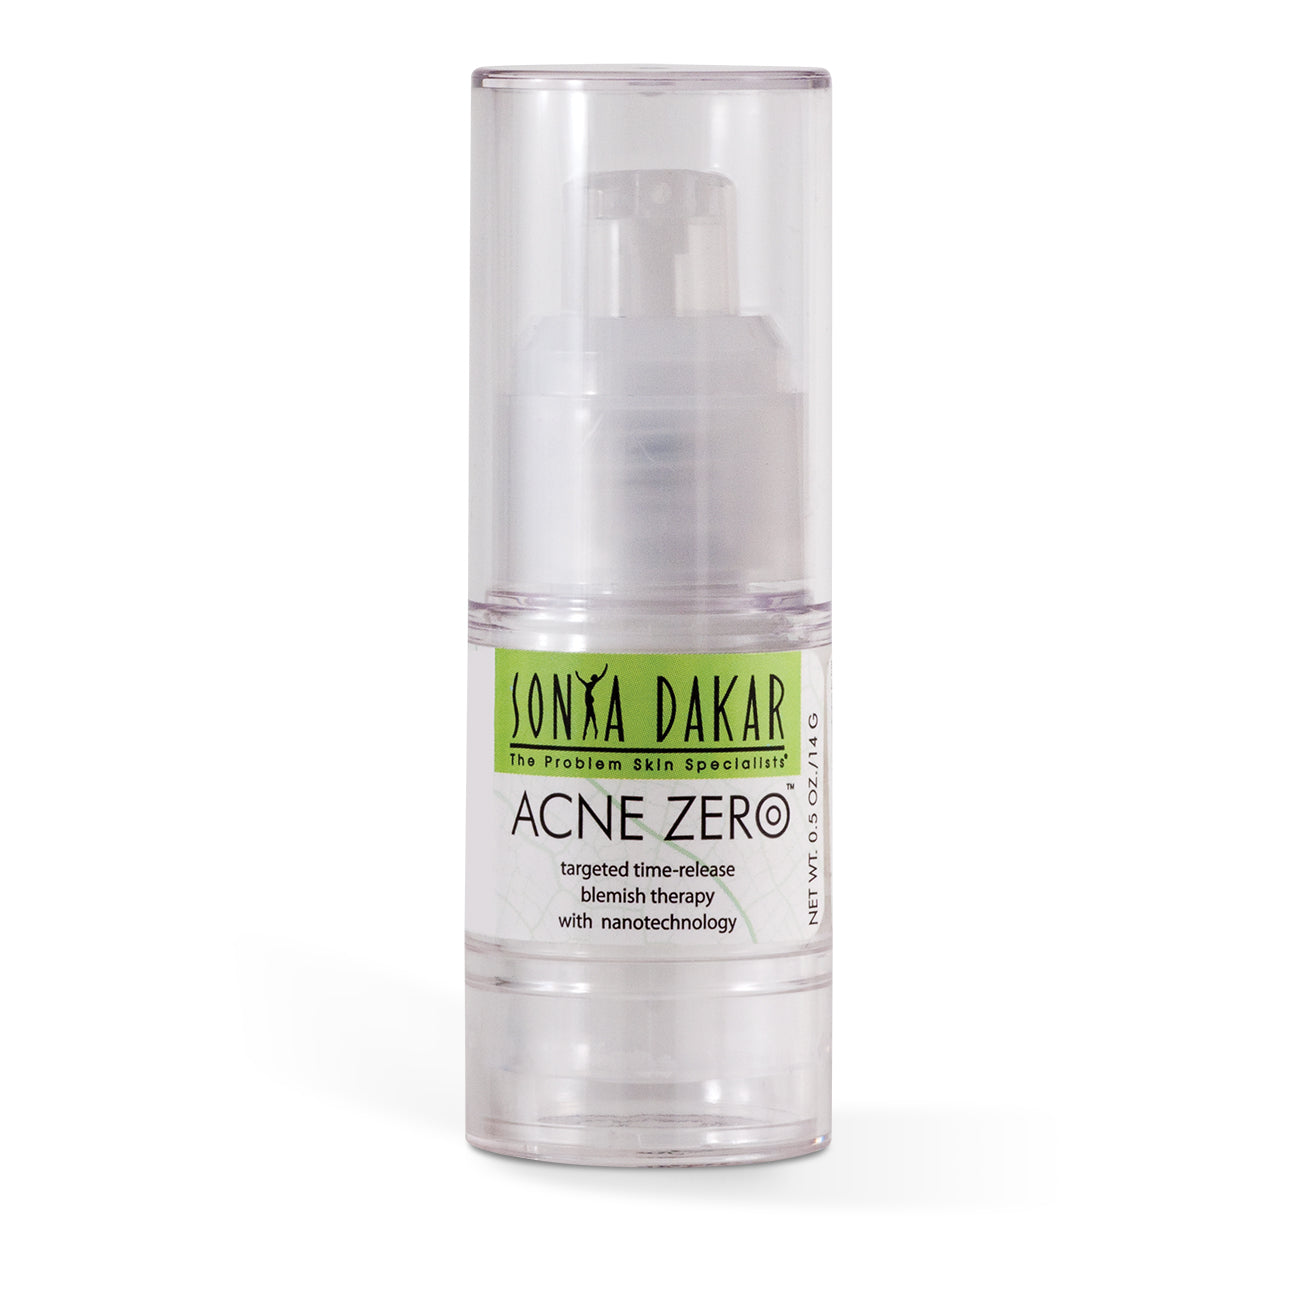 Sonya Dakar Acne Zero time-release blemish treatment